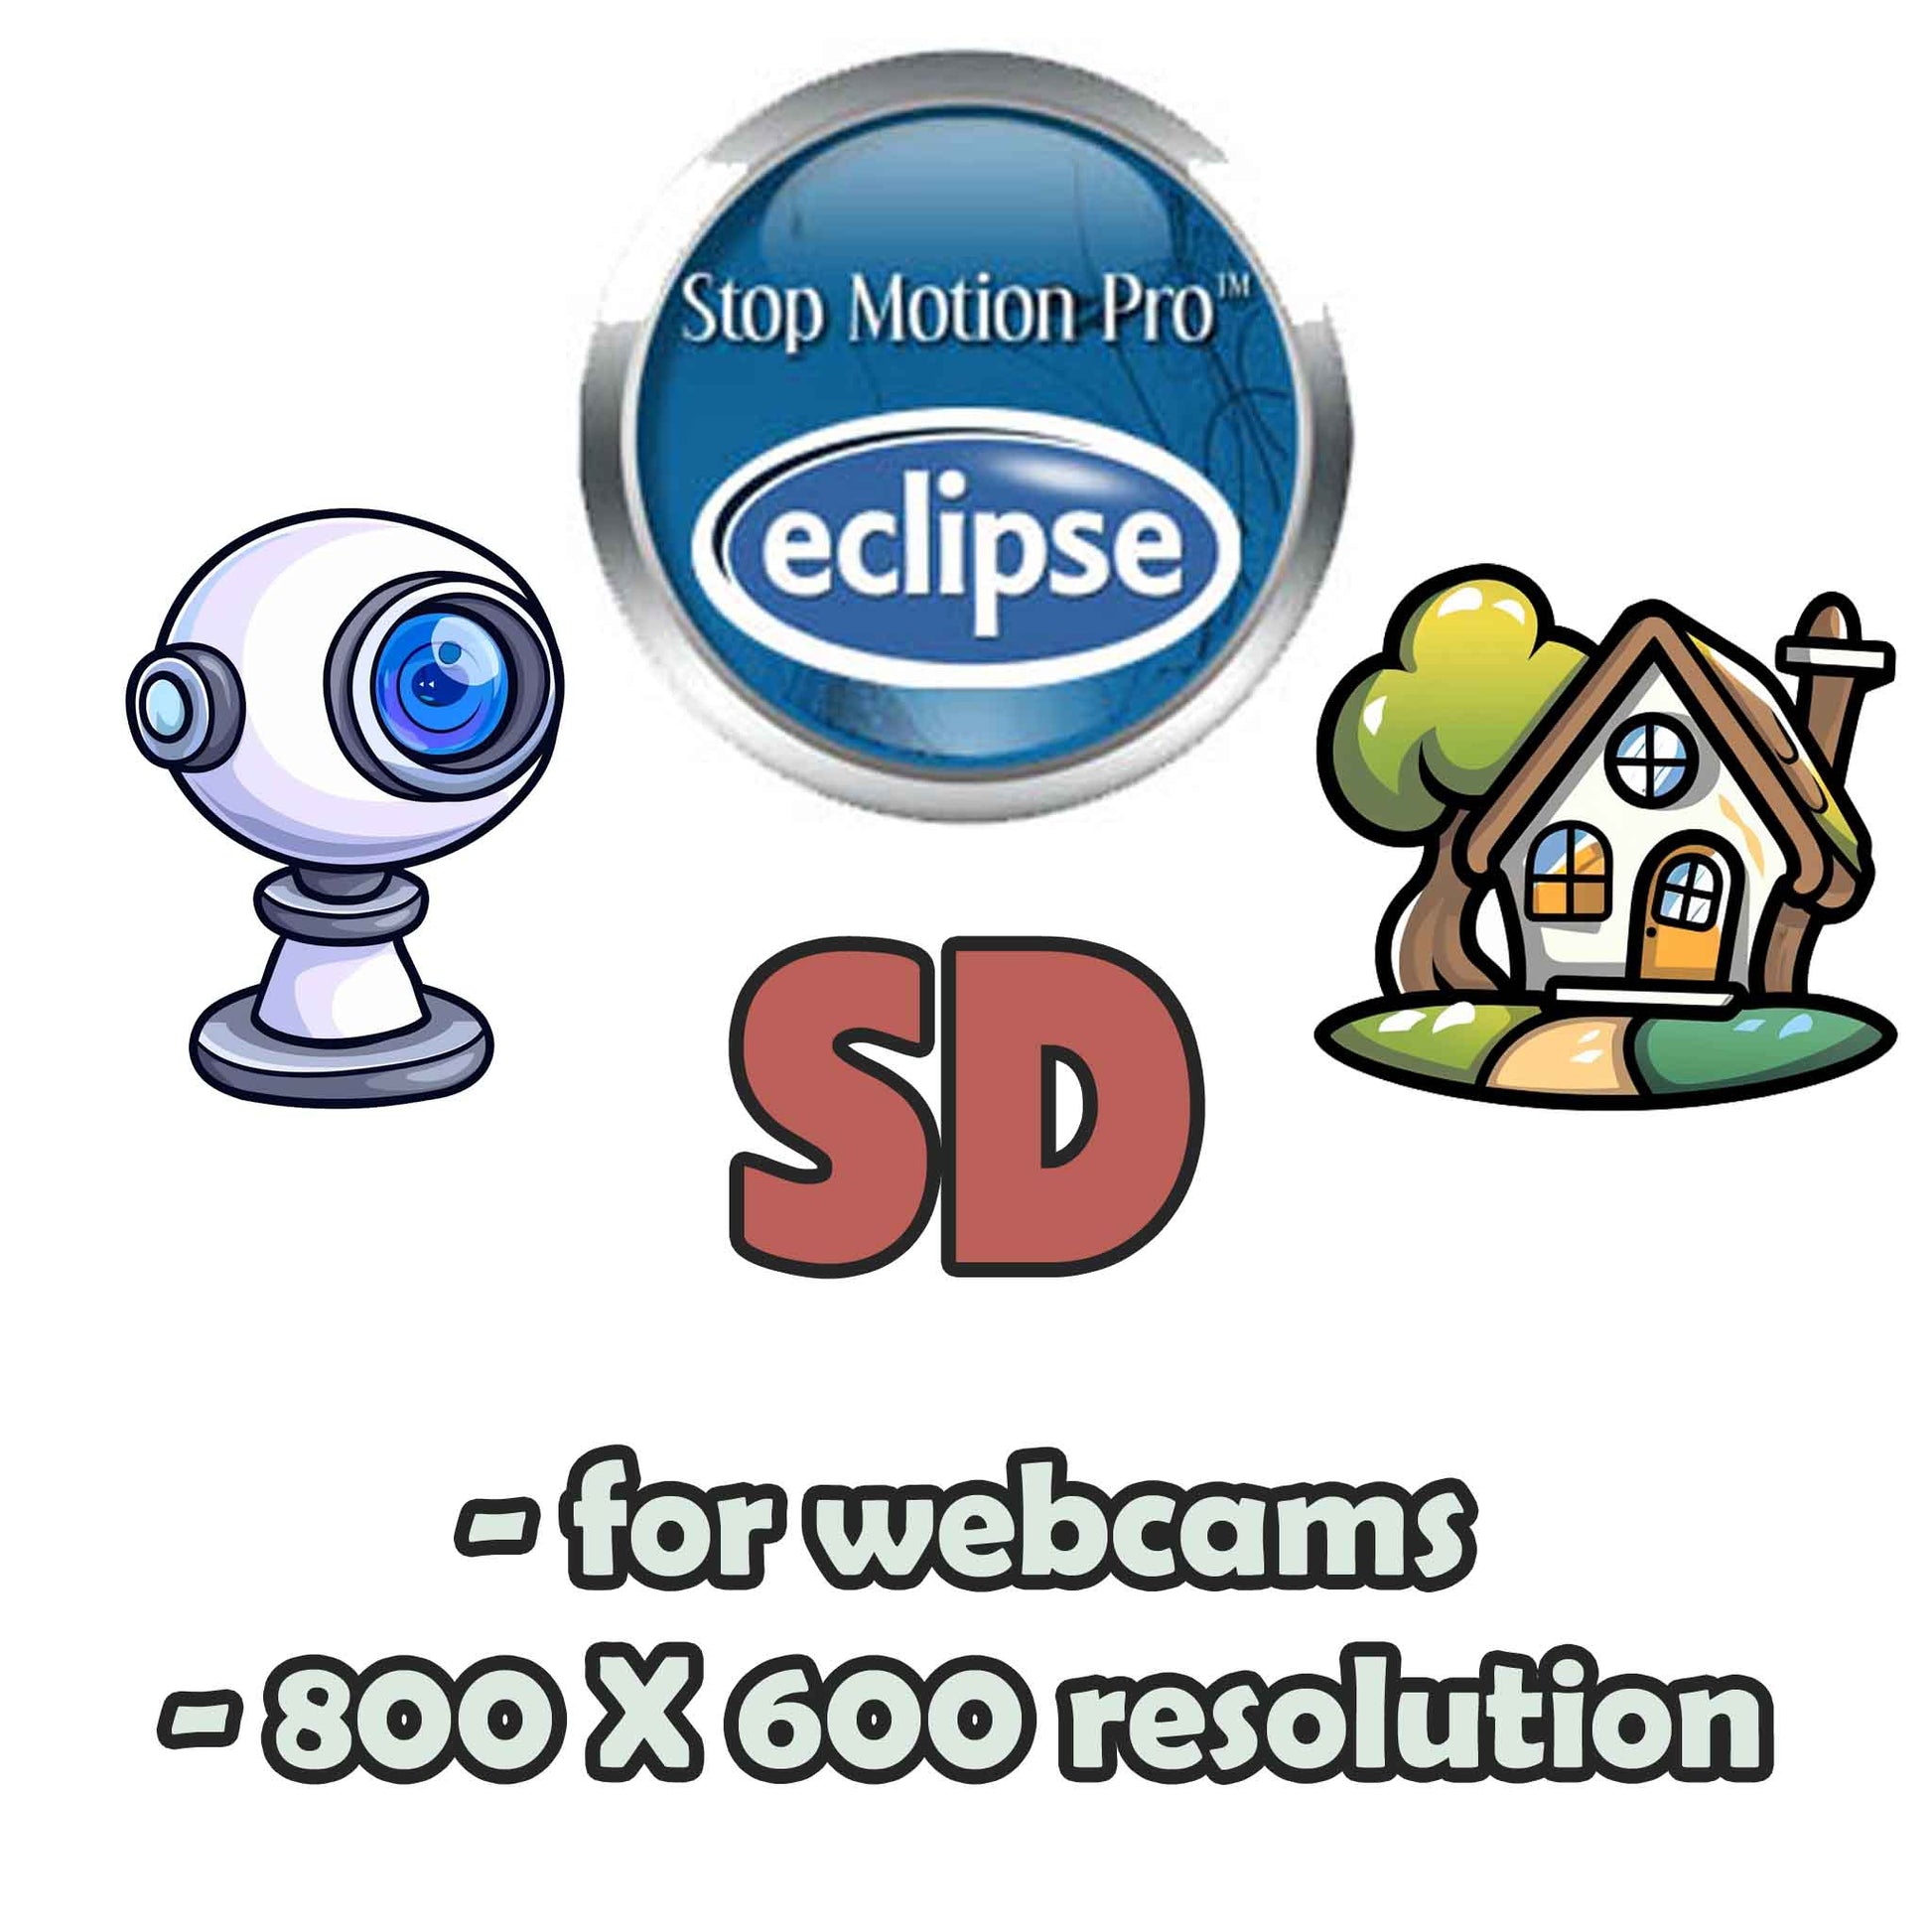 Stop Motion Pro Eclipse SD Single License